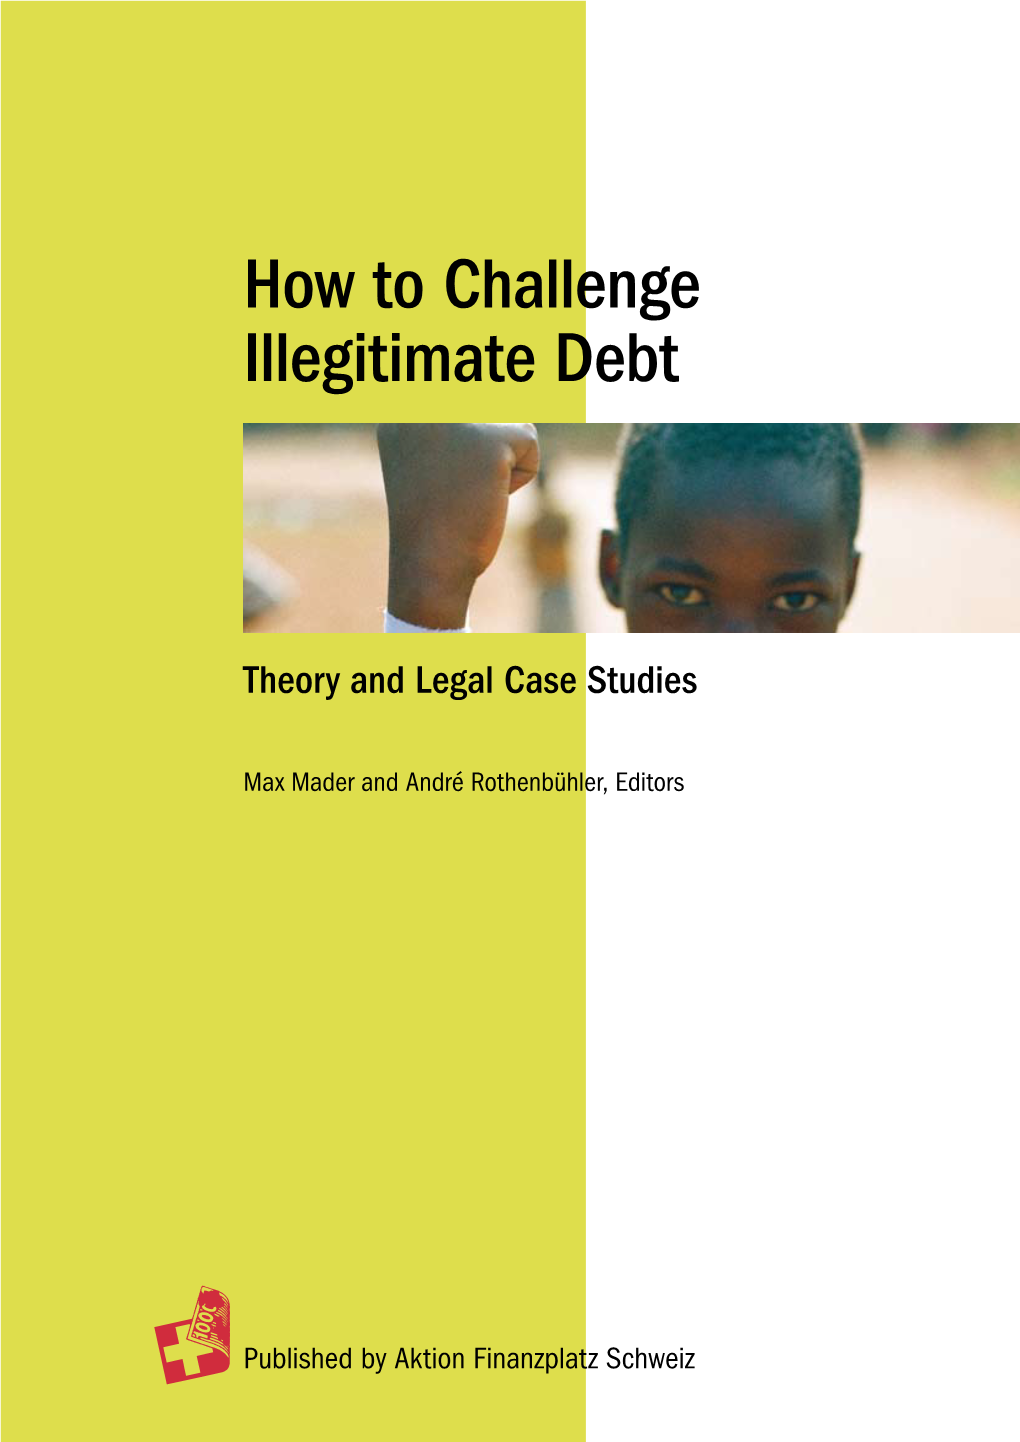 How to Challenge Illegitimate Debt